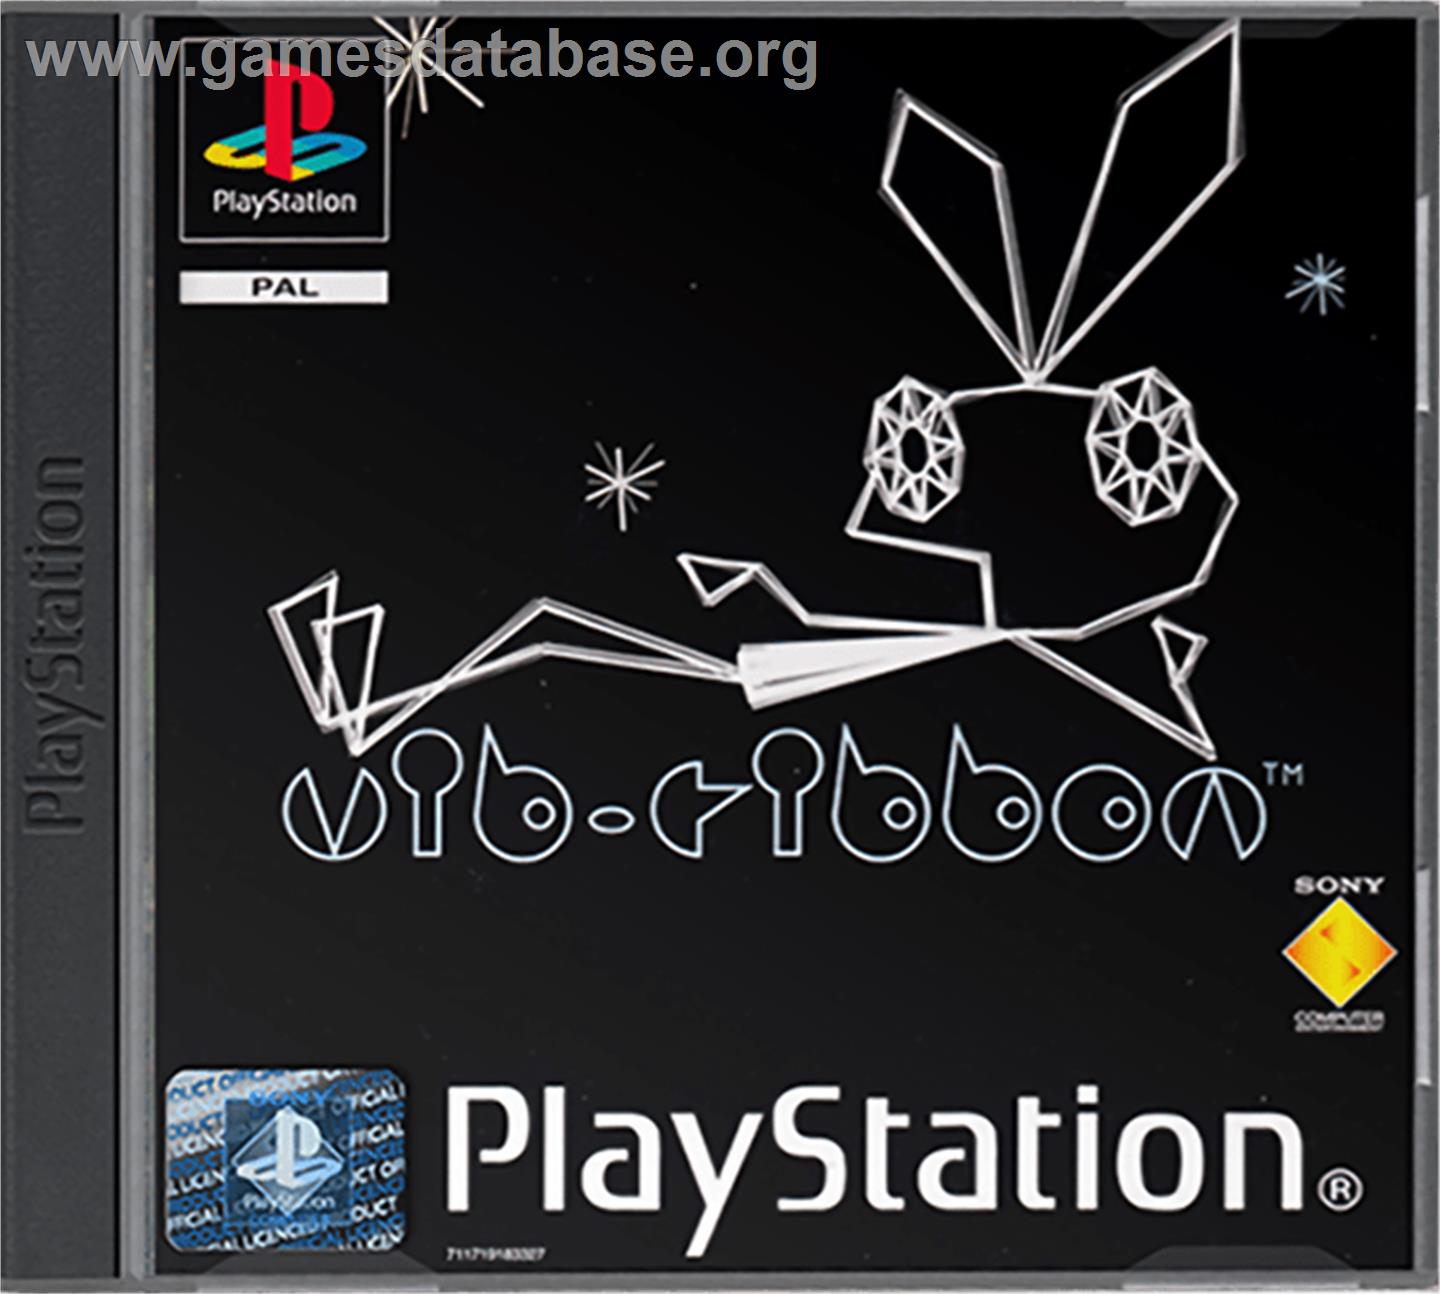 Vib Ribbon - Sony Playstation - Artwork - Box